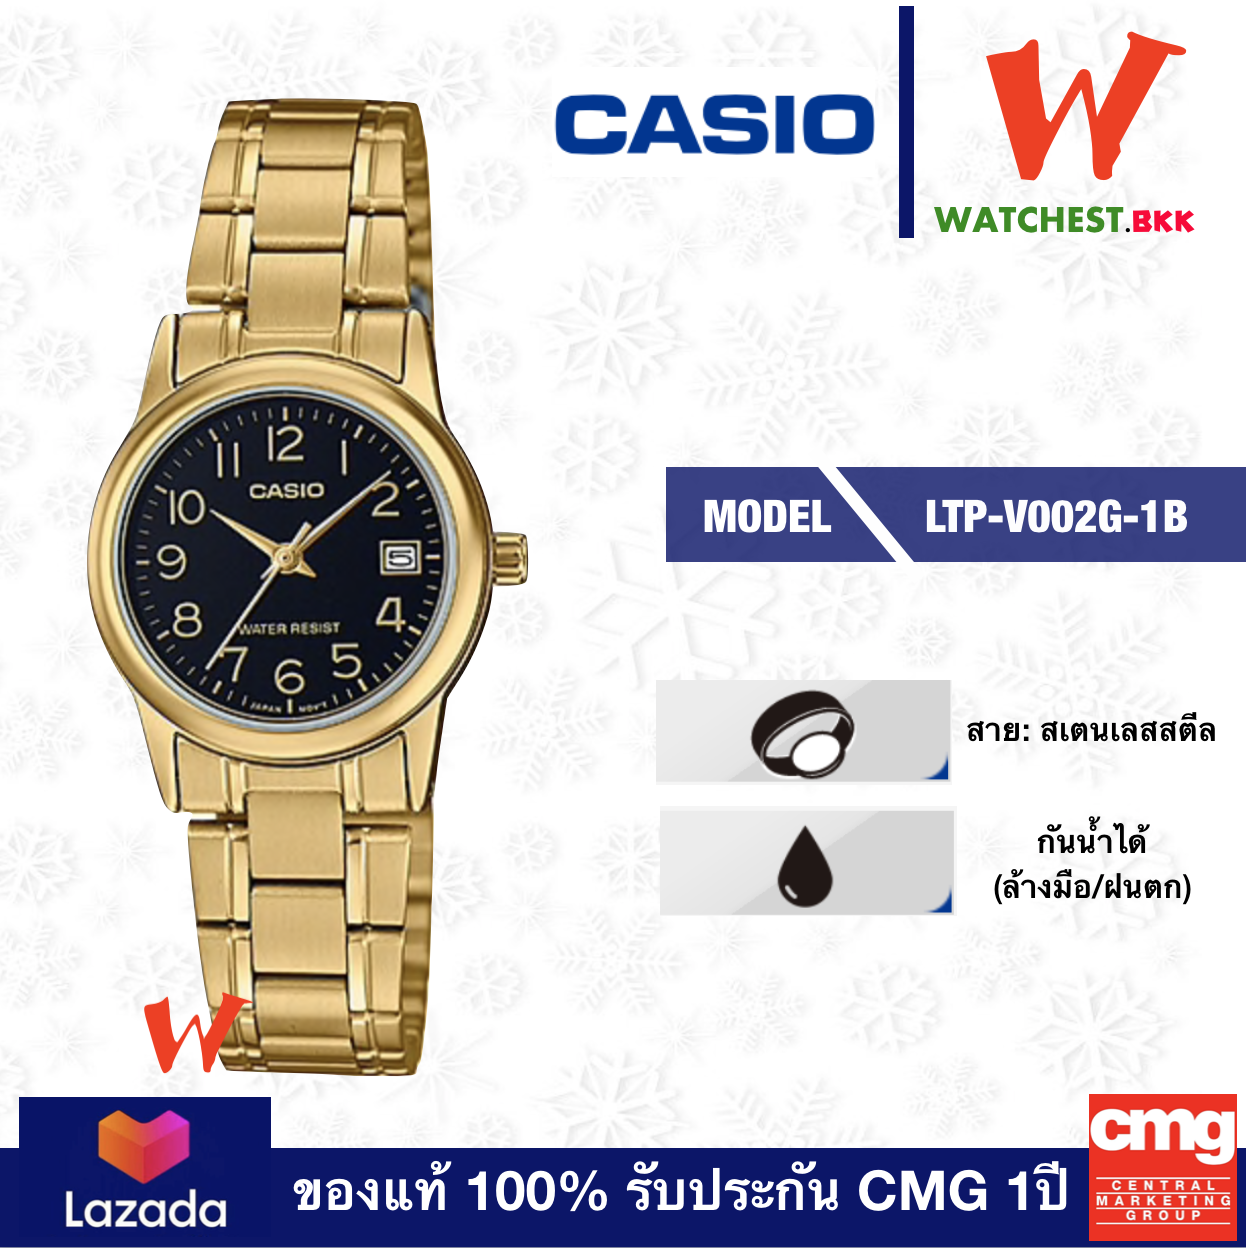 casio นาฬิกาผู้หญิง สายสเตนเลส รุ่น LTP-V002G-1B, คาสิโอ้ LTPV002 ตัวล็อคแบบบานพับ (watchestbkk คาสิโอ แท้ ของแท้100% ประกัน CMG)